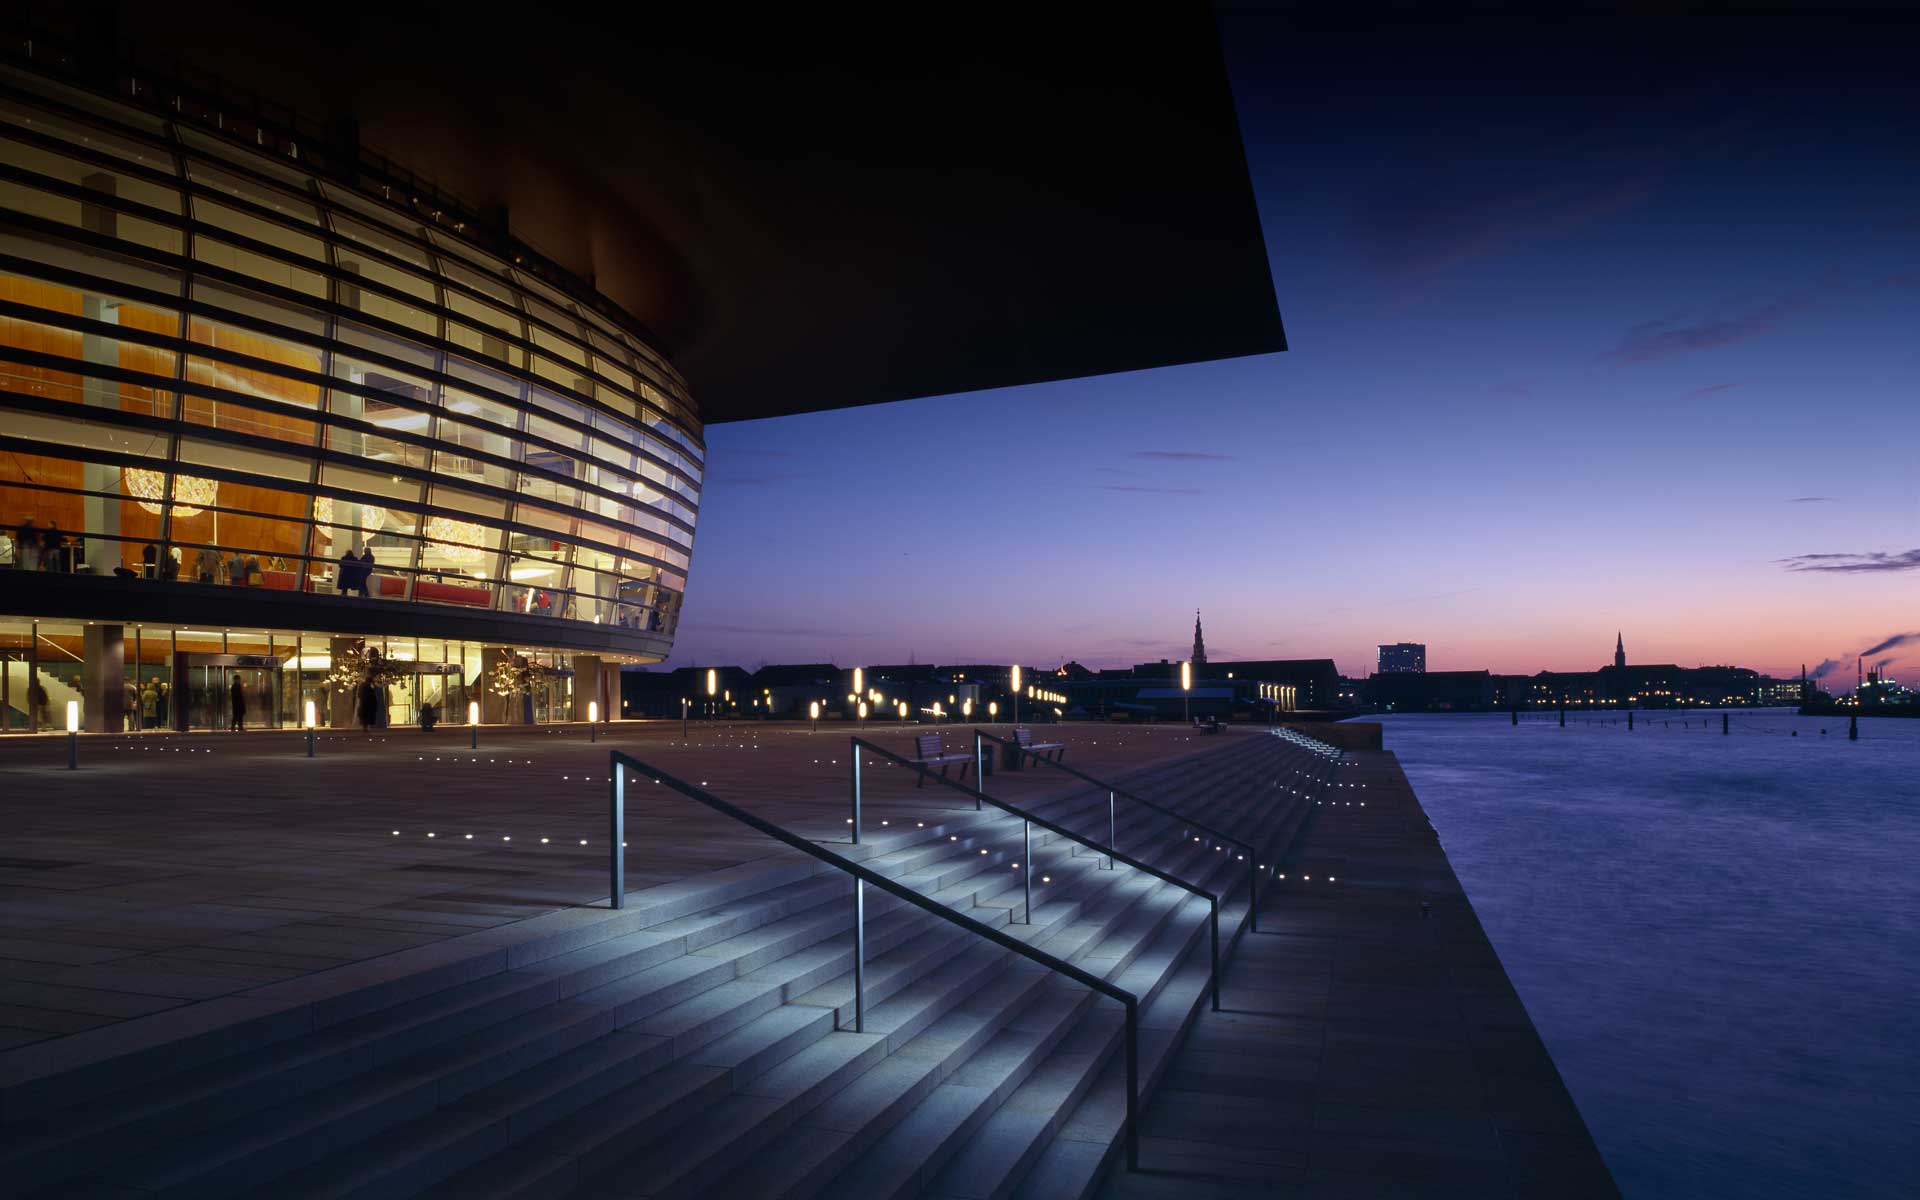 The Royal Danish Opera House